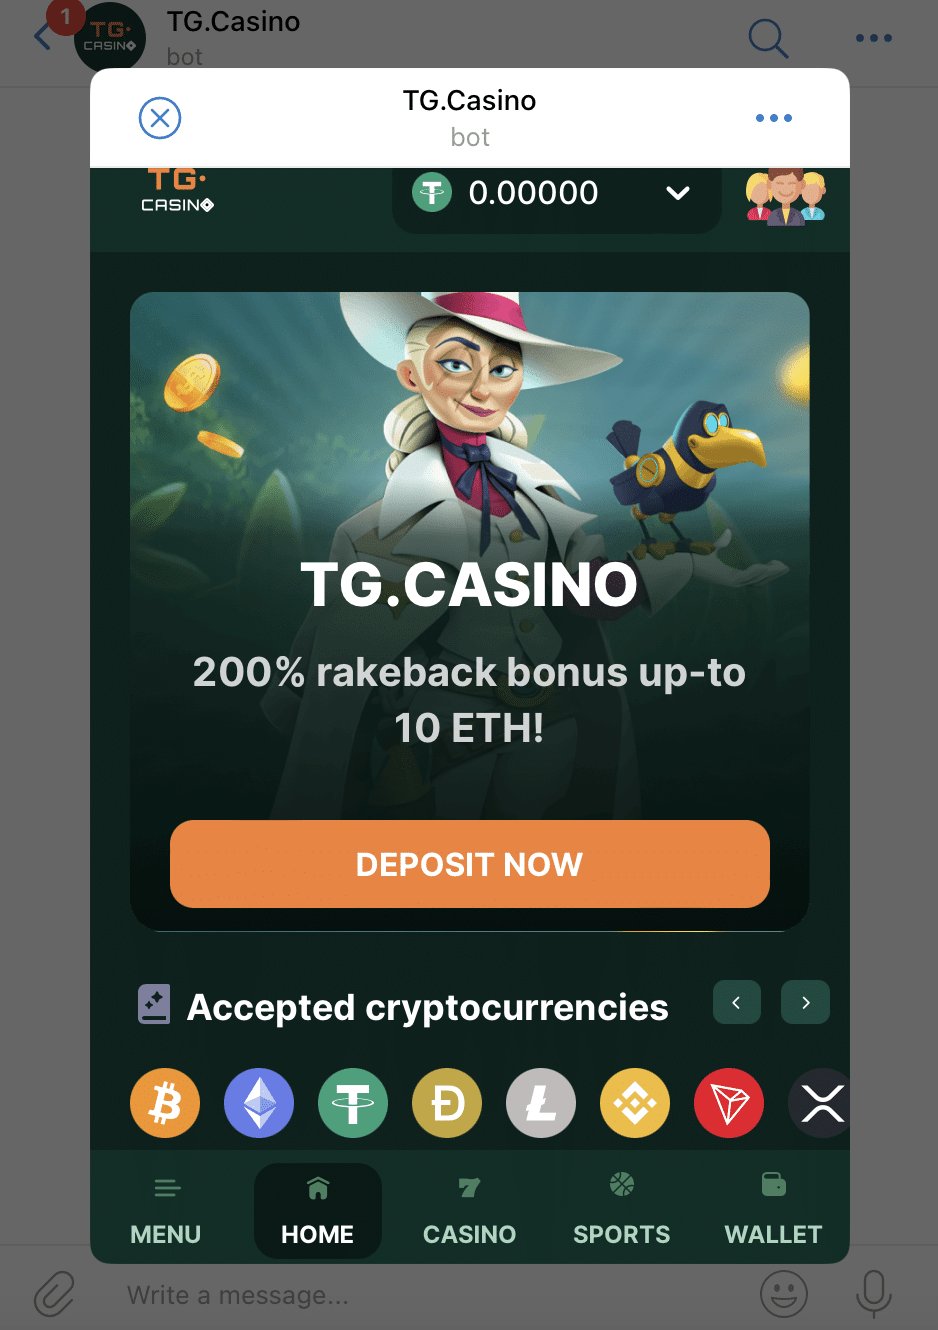 TG.Casino Telegram Bot